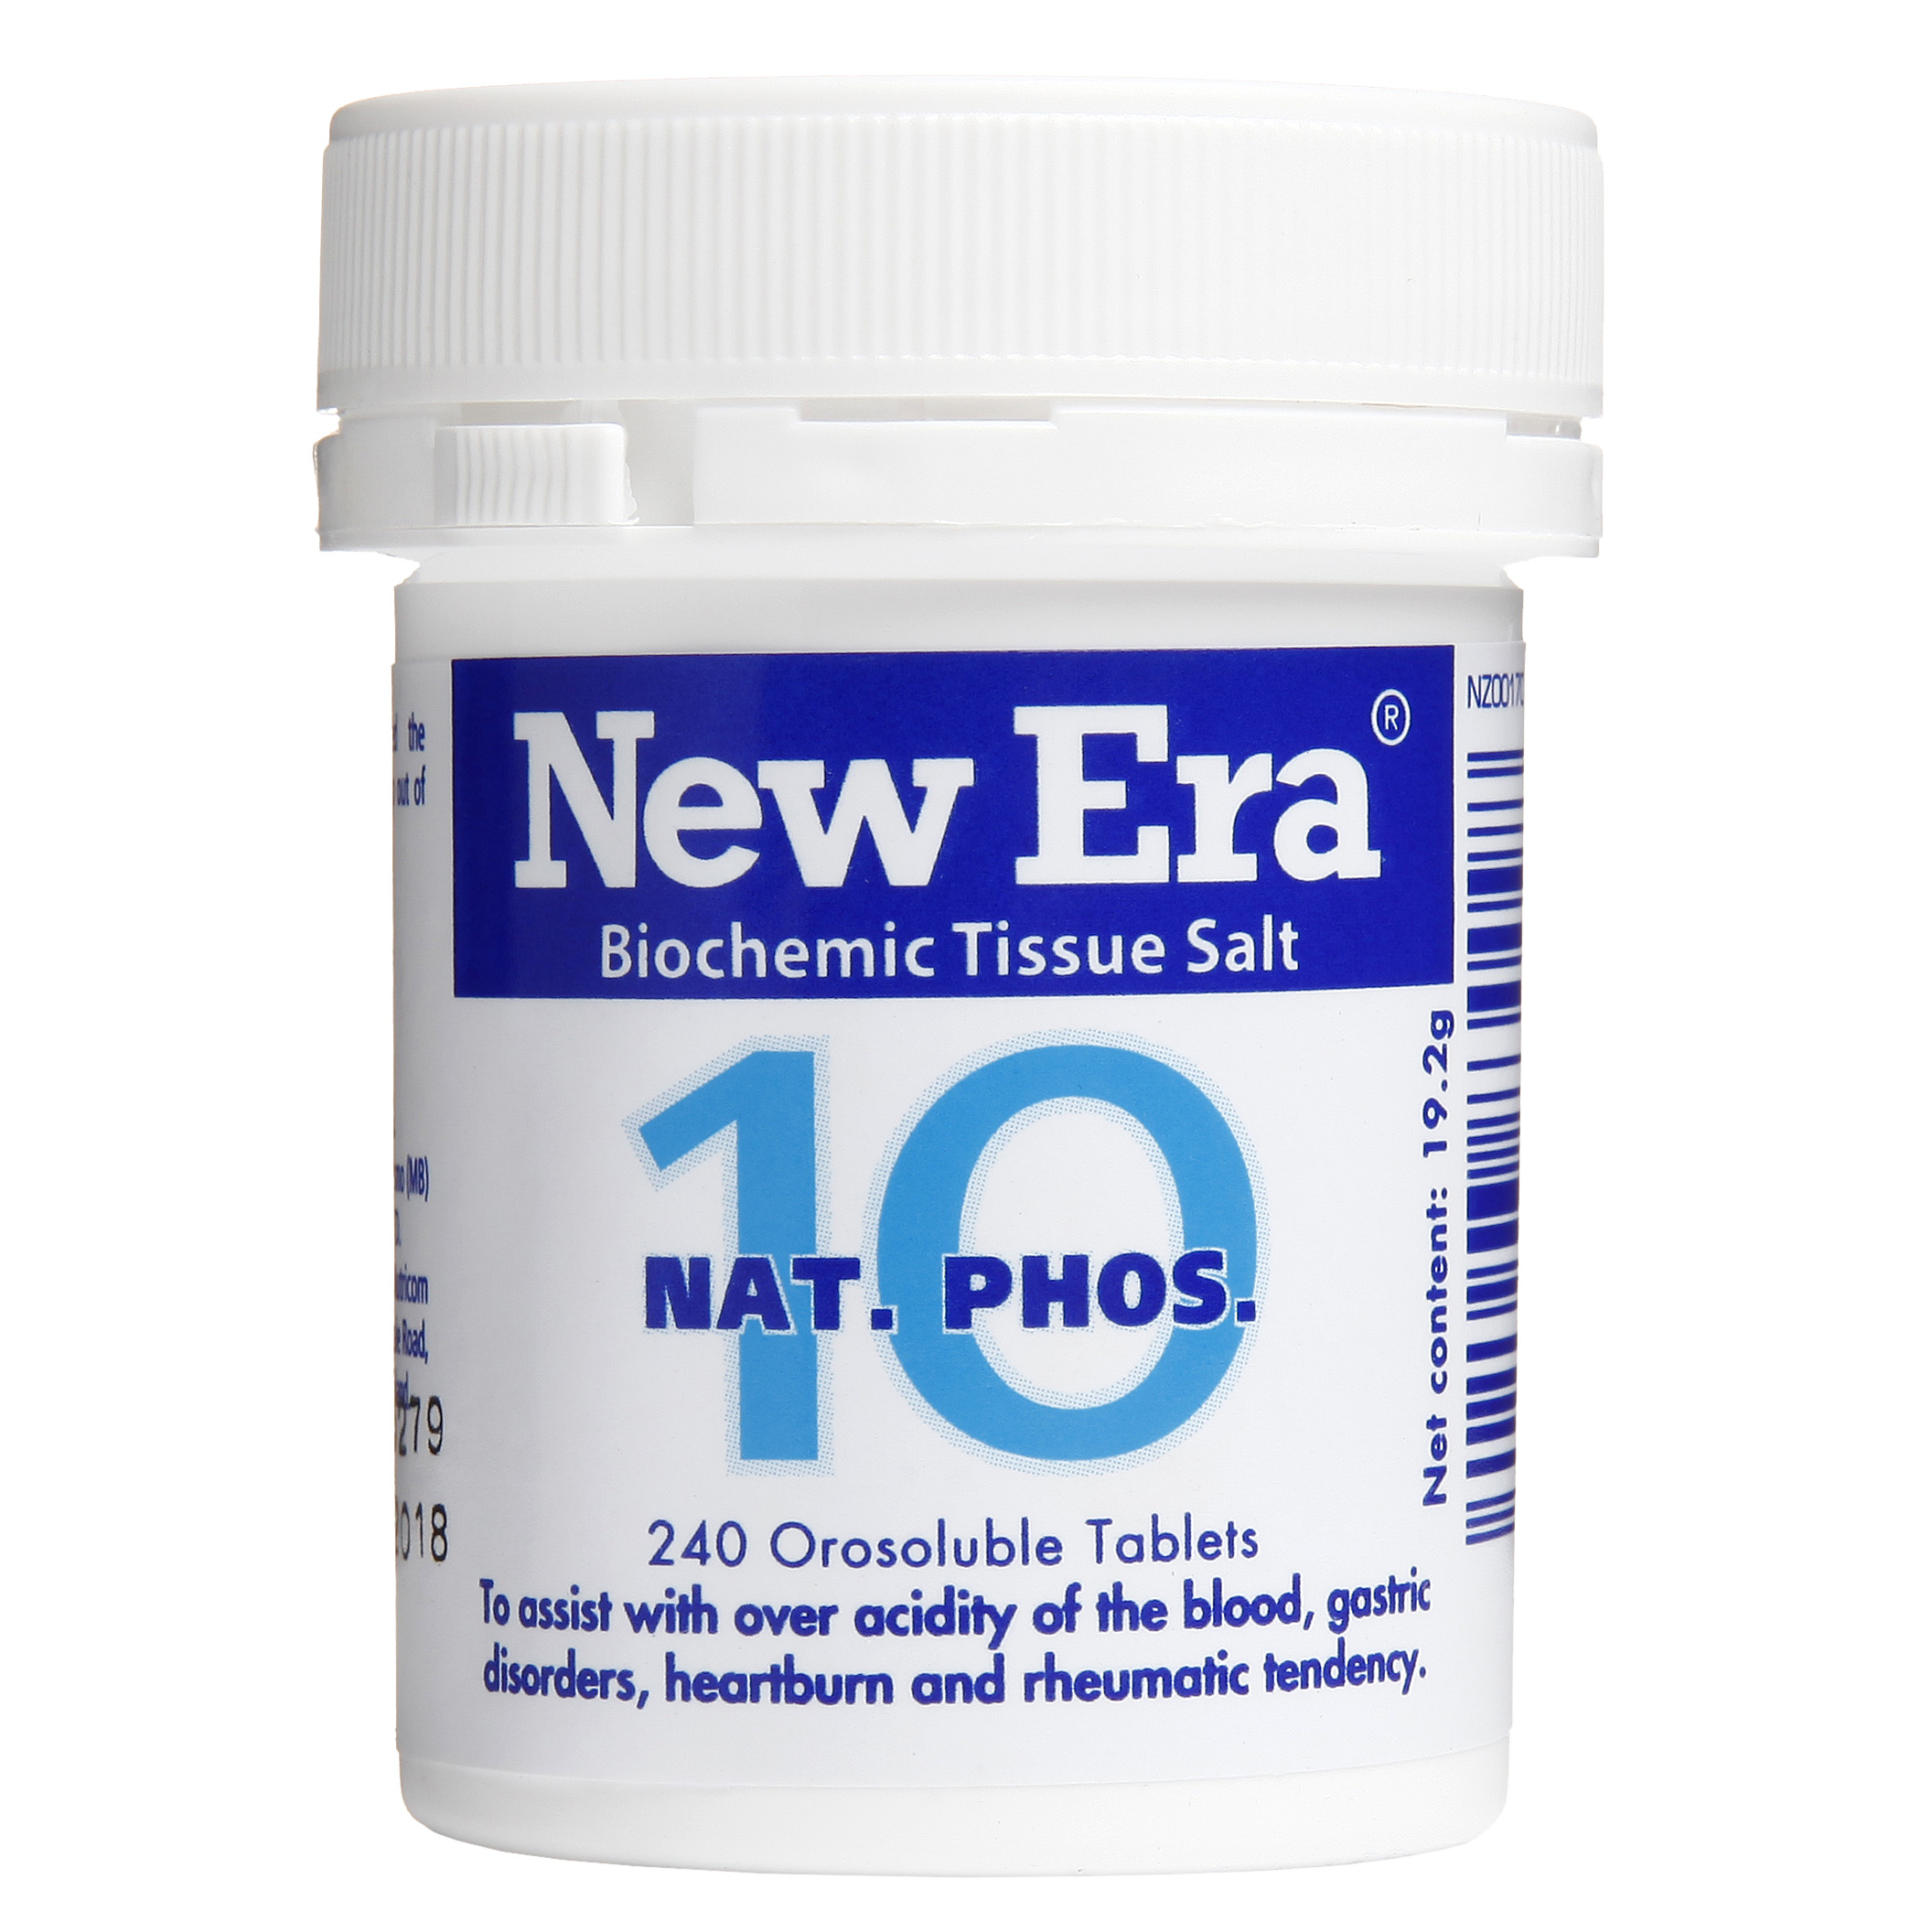 New Era Tissue Salt Nat. Phos. #10 - Natural Antacid